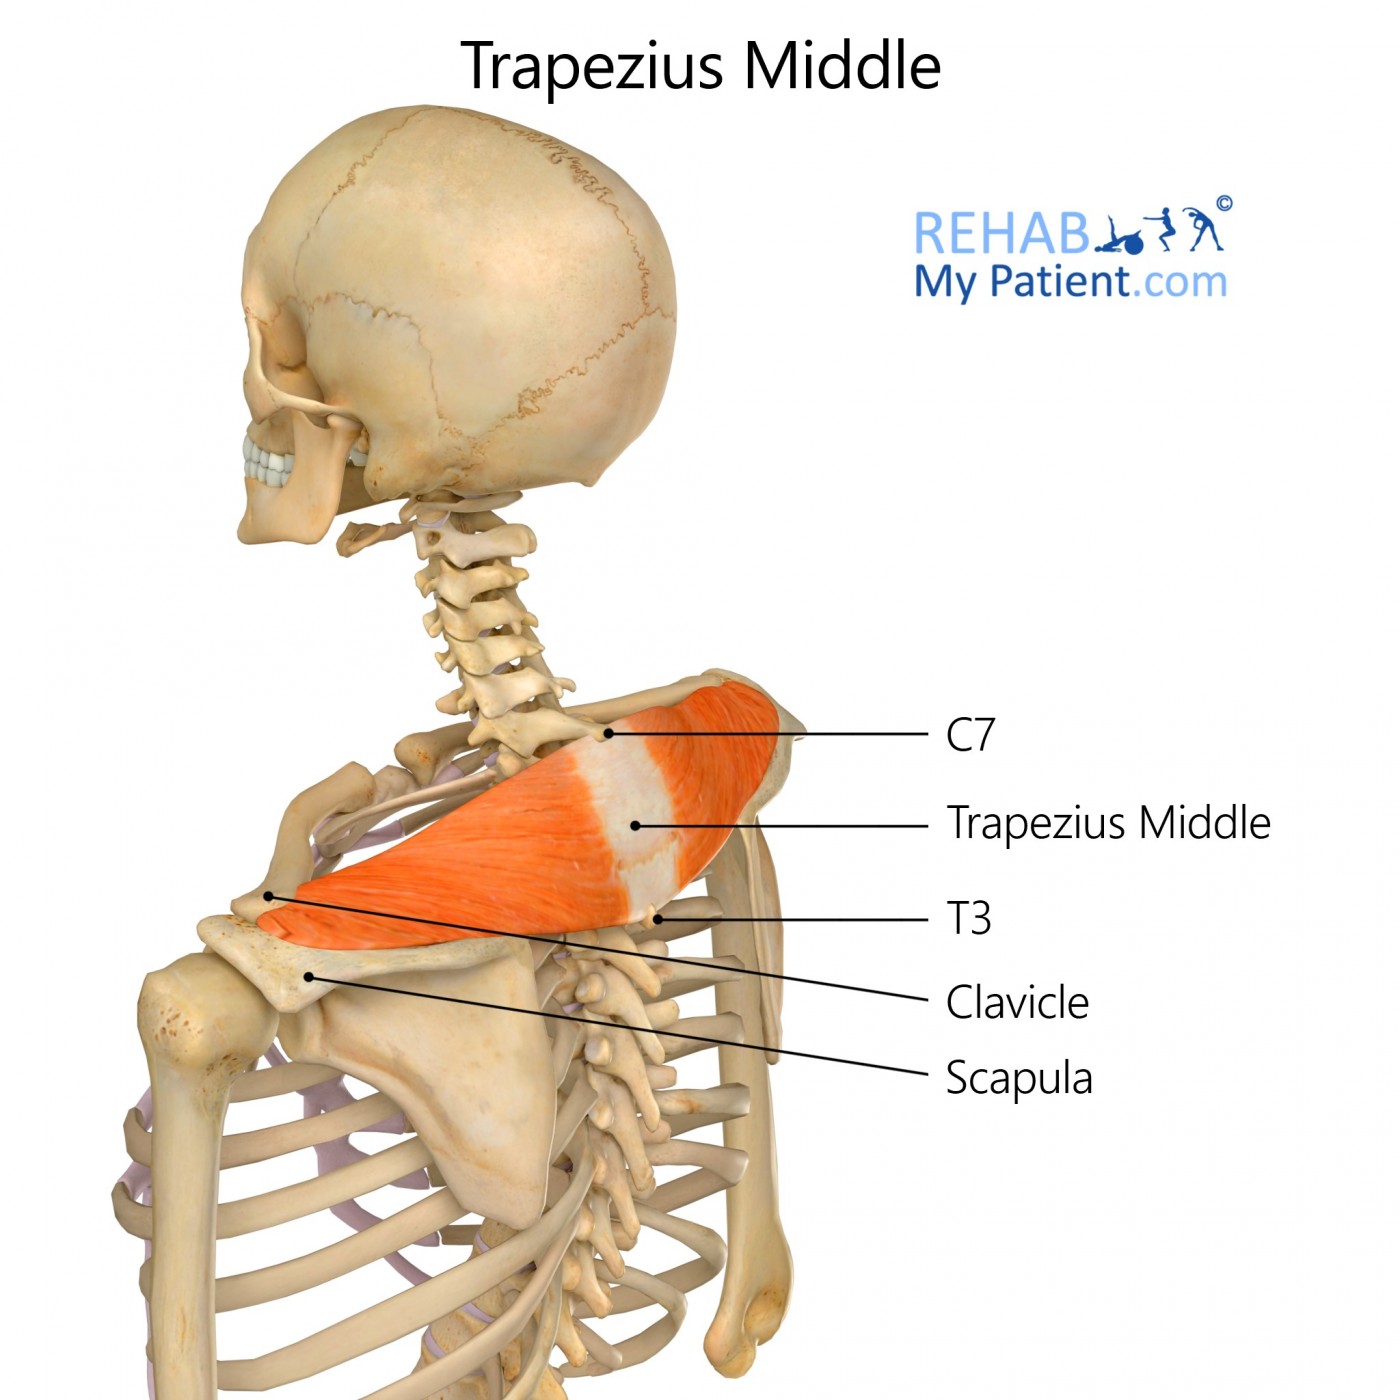 Trapezius Middle